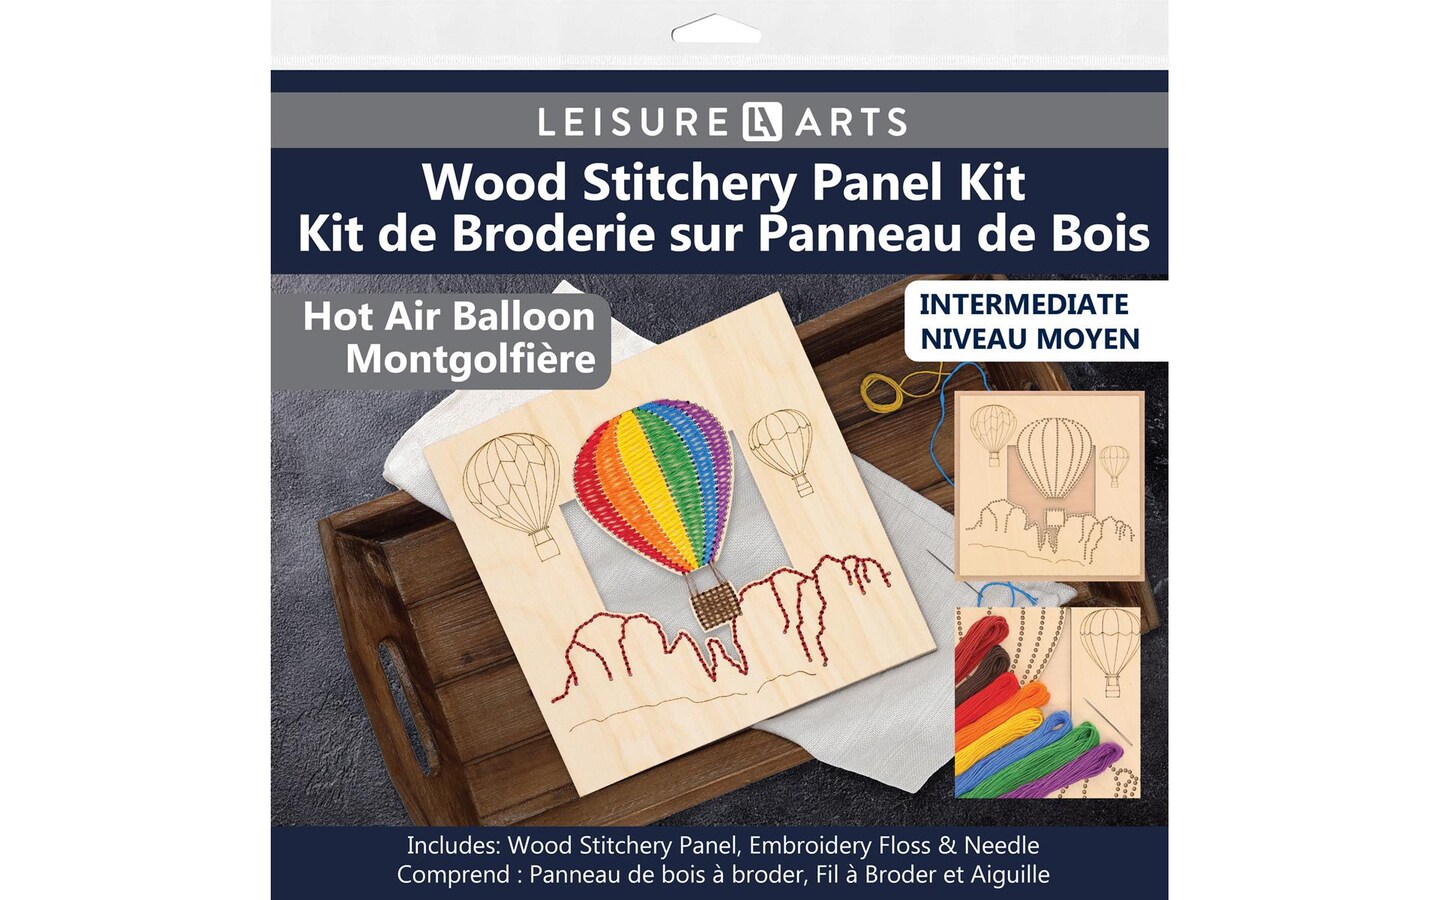 Leisure Arts Wood Stitchery Shadow Box Kit - Hot Air Balloon